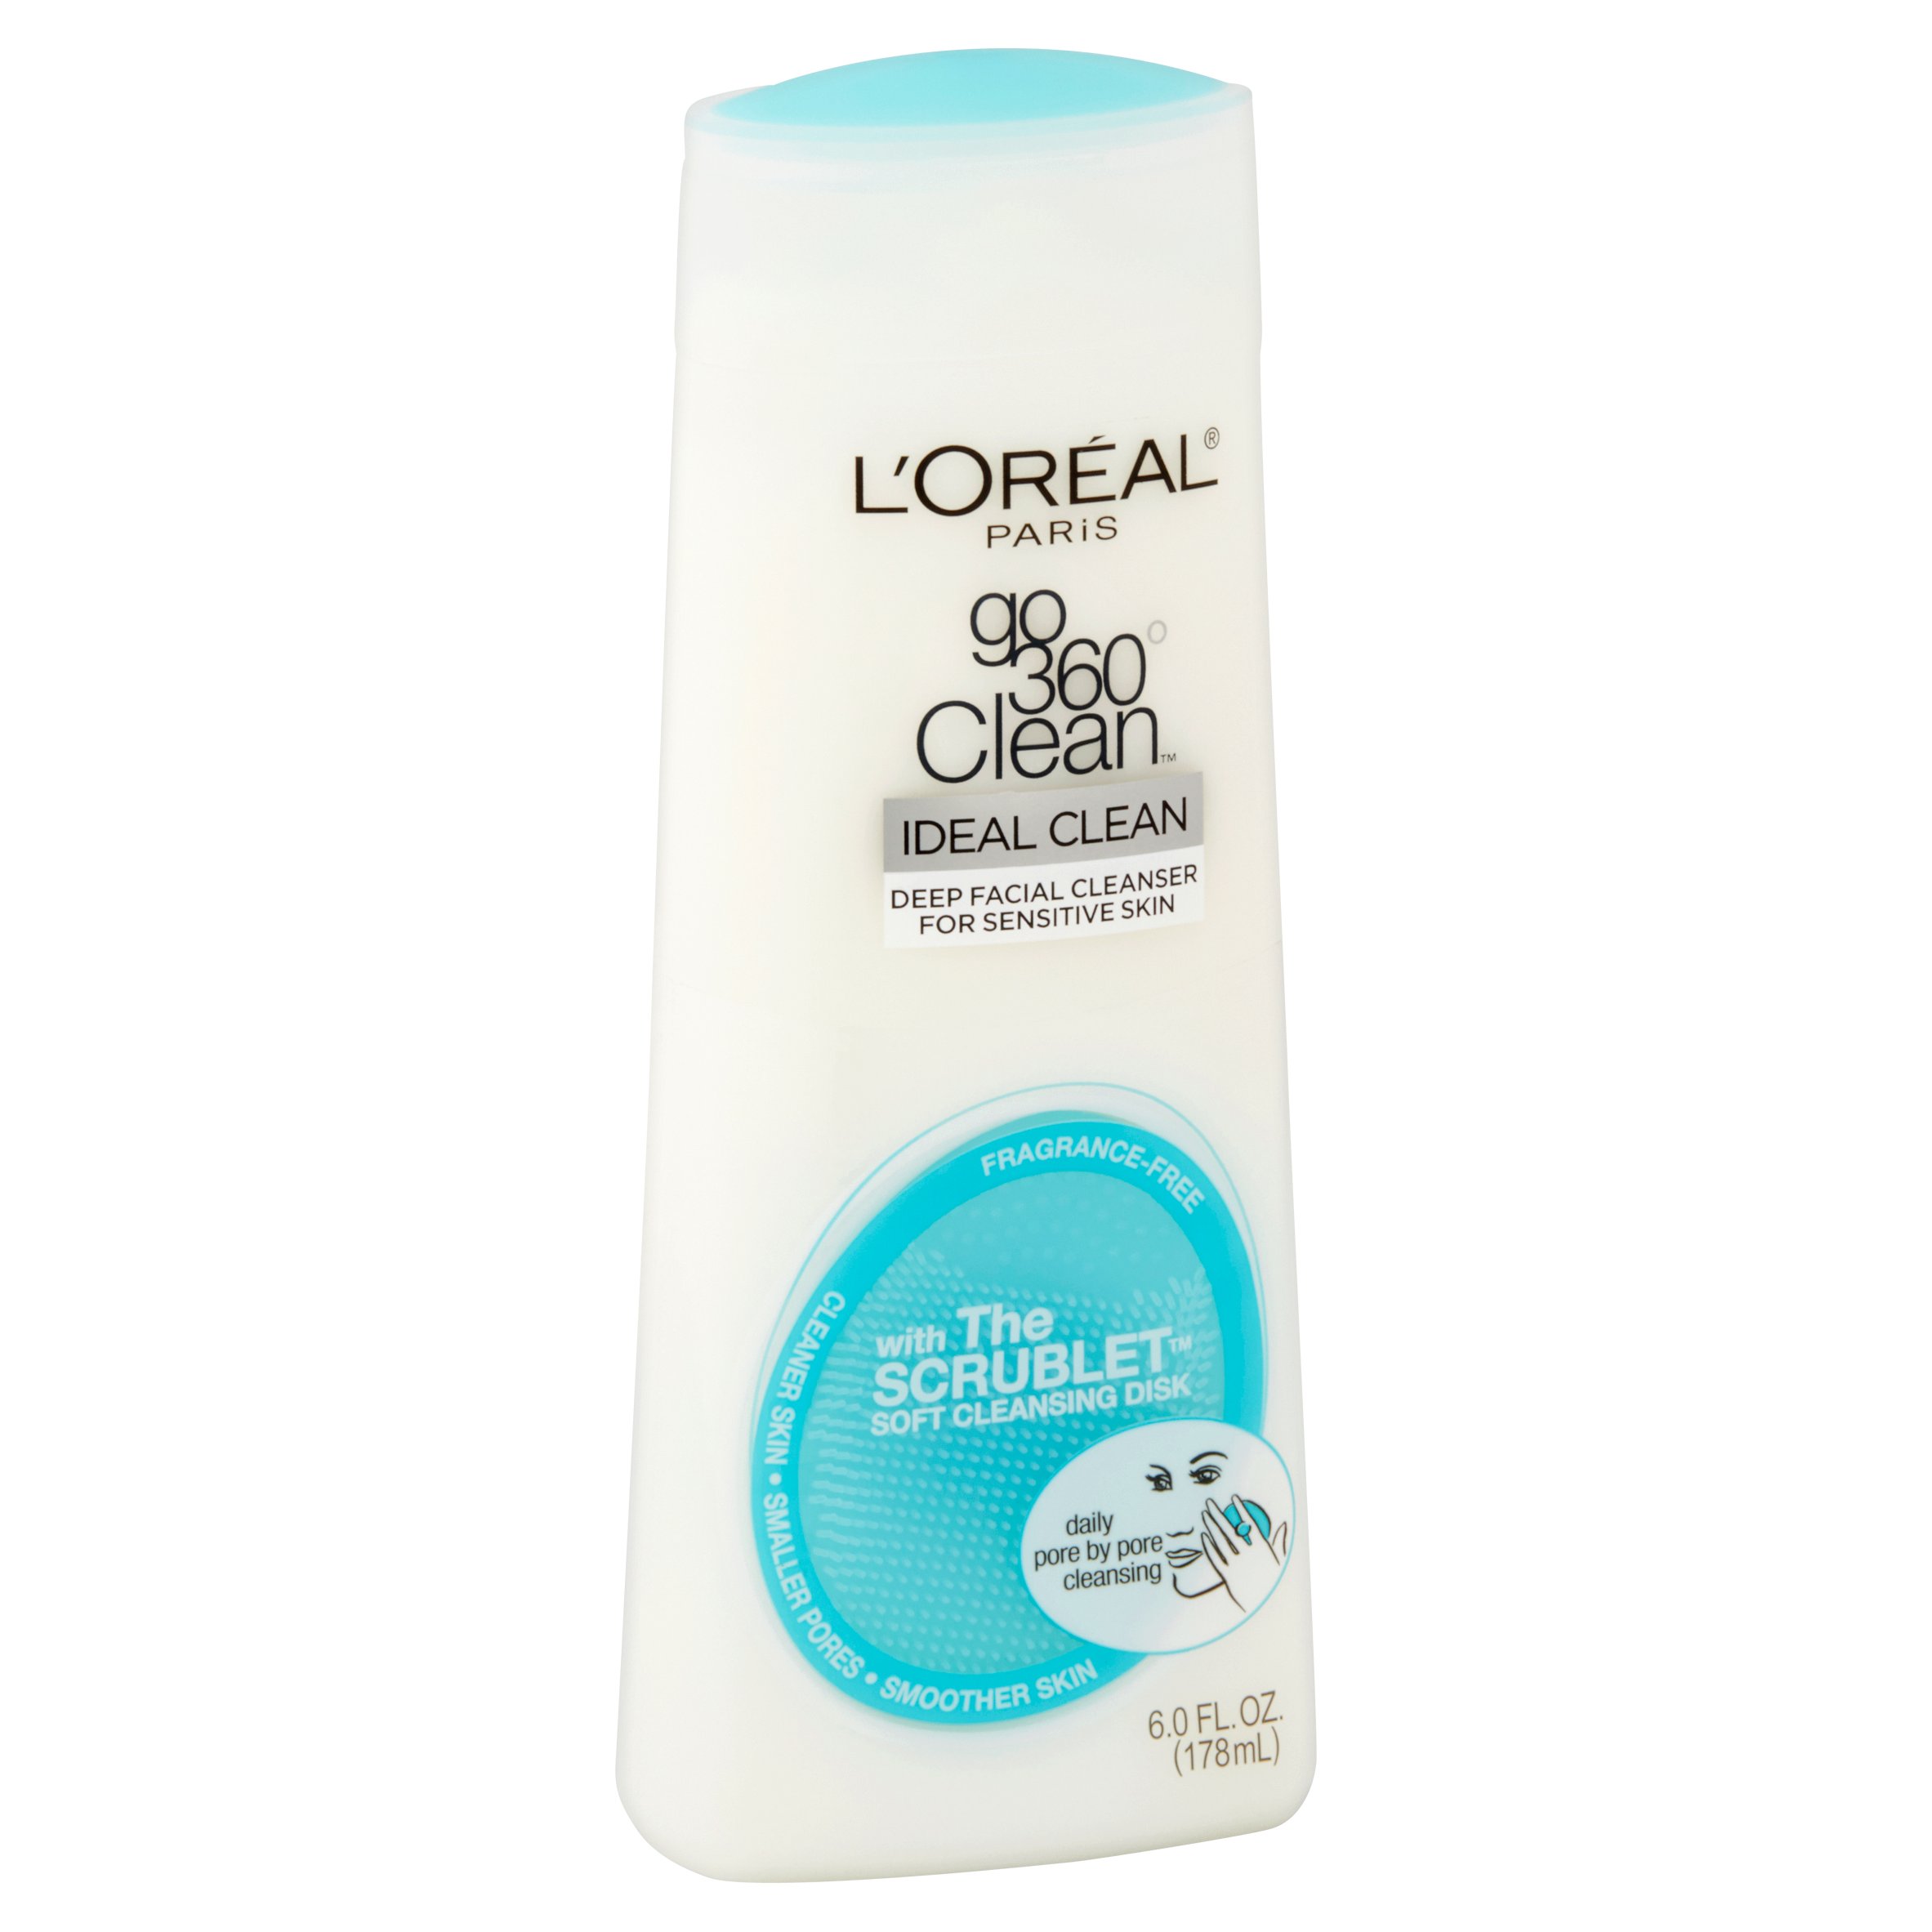 L'Oreal Paris Go 360 Clean Ideal Clean Deep Facial Cleanser, 6.0 Fl Oz - image 2 of 6